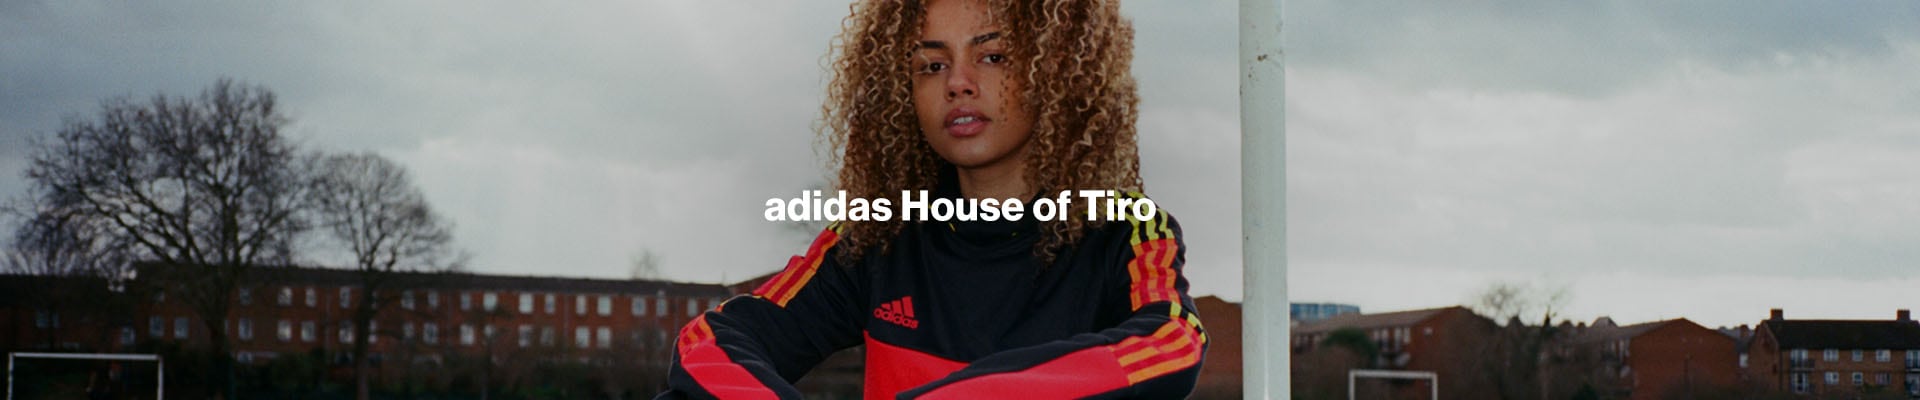 adidas House of Tiro